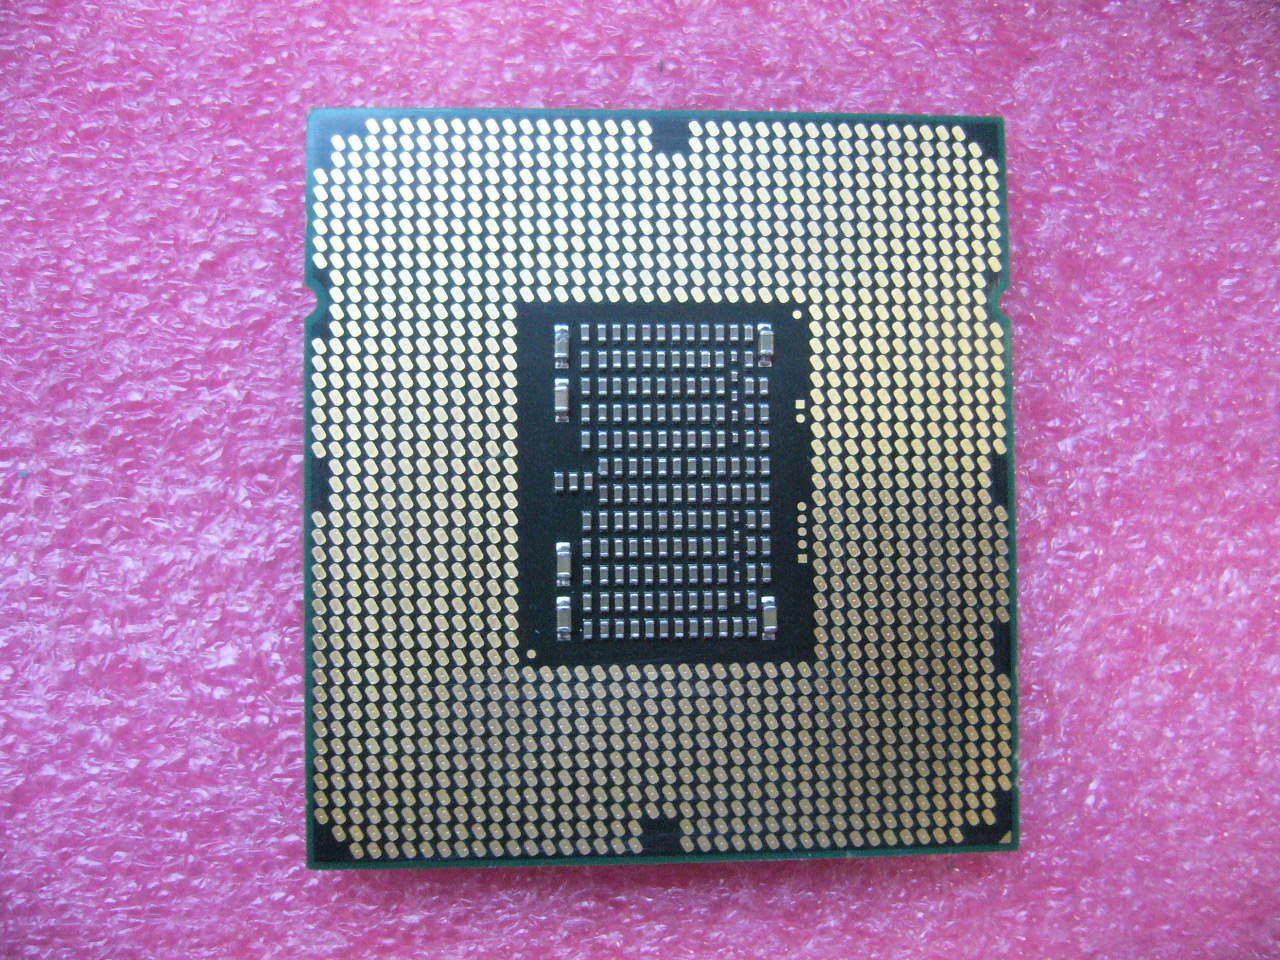 QTY 1x INTEL Six-Cores Xeon CPU E5645 2.40GHZ/12MB LGA1366 SLBWZ - Click Image to Close